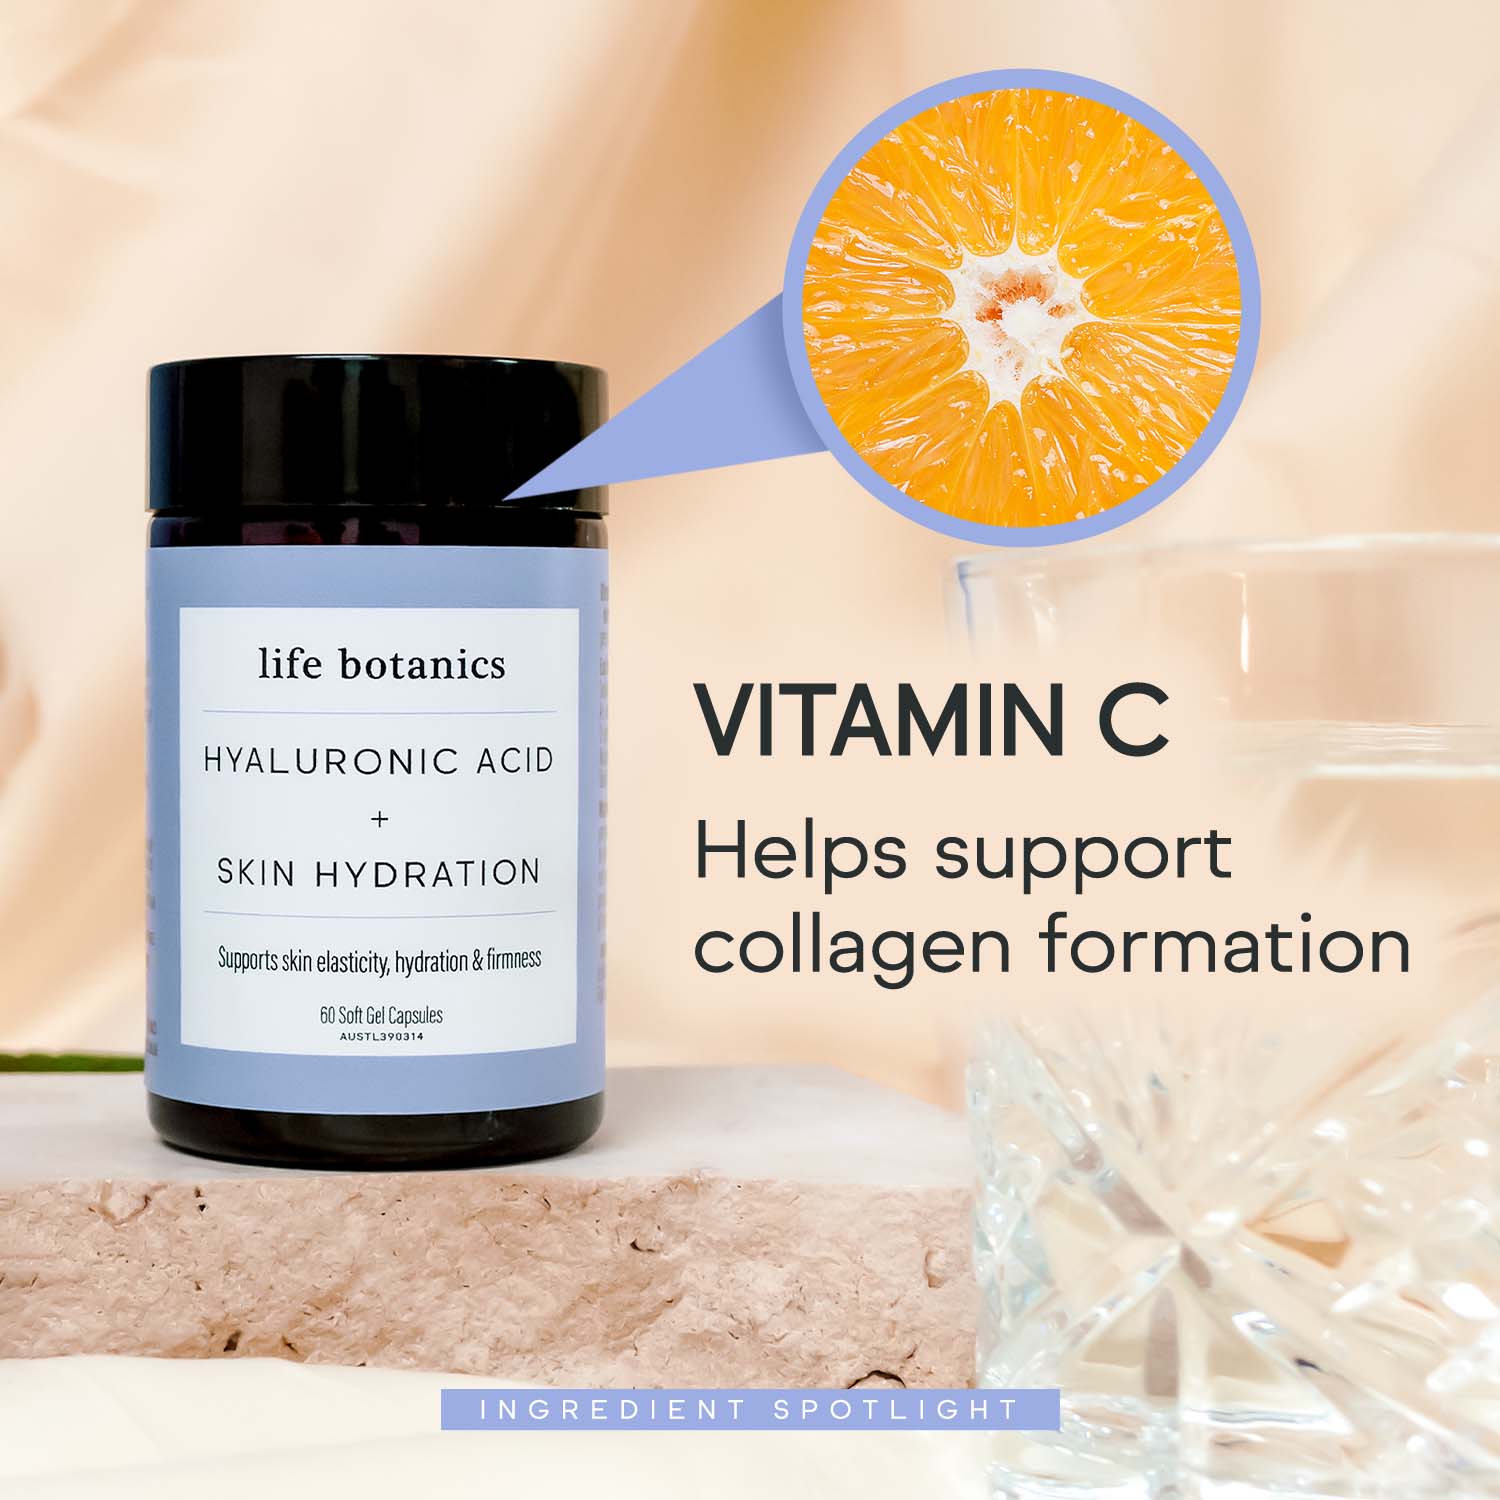 life botanics Hyaluronic Acid + Skin Hydration Vitamin C 180